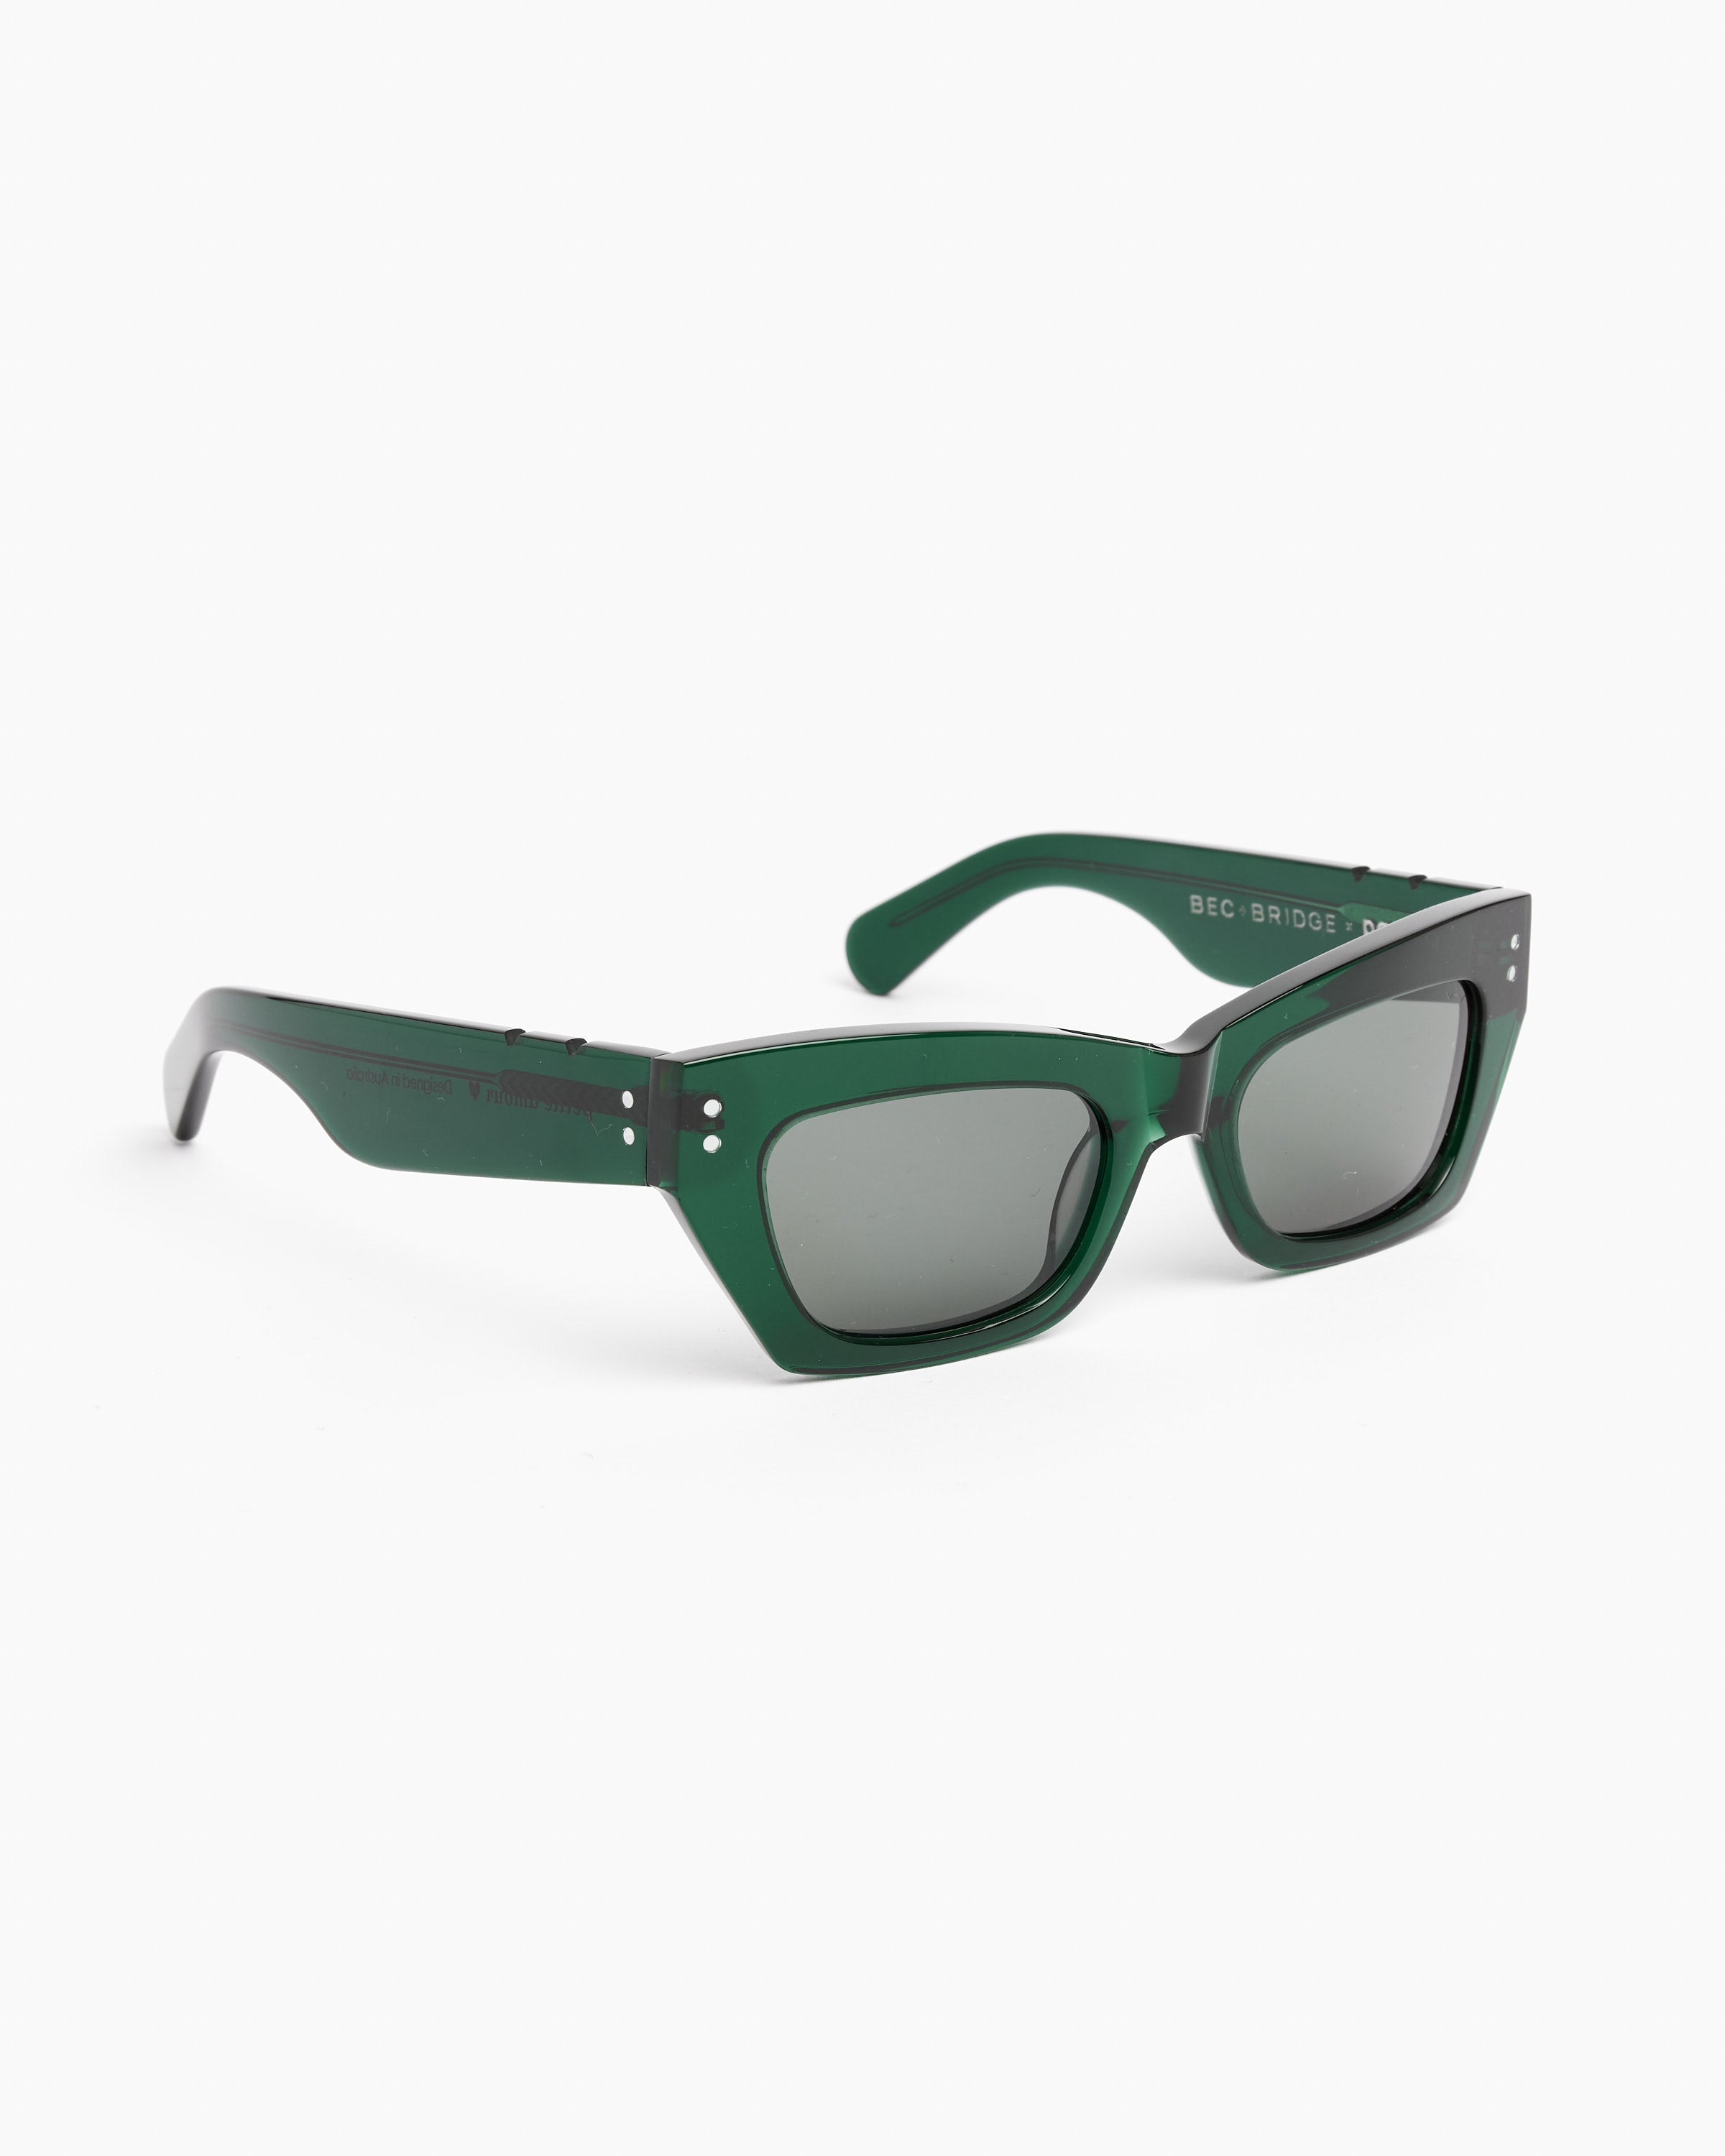 Petite Amour Sunglasses in Emerald